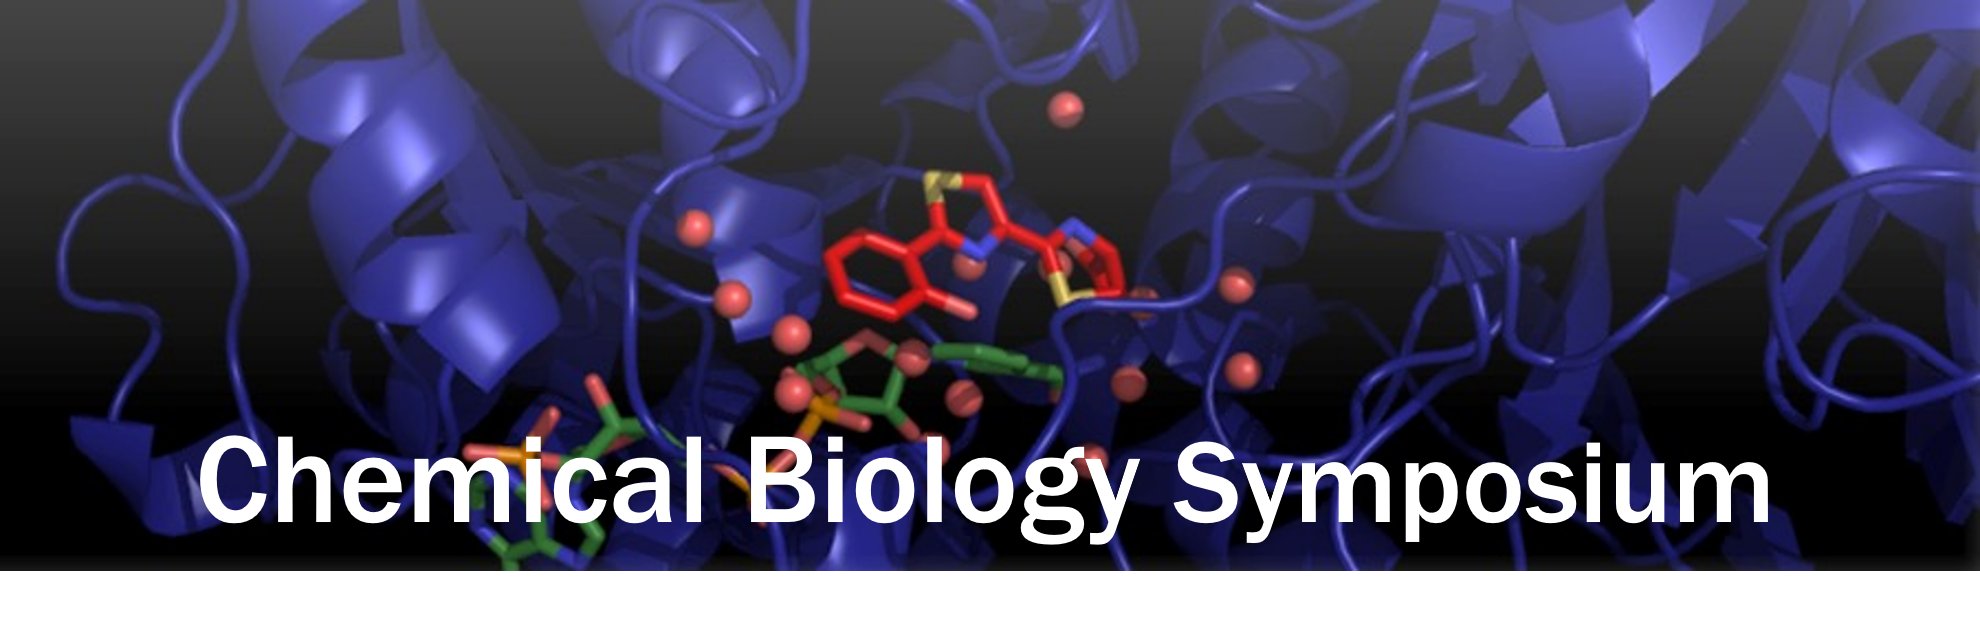 Chemical Biology Symposium Logo